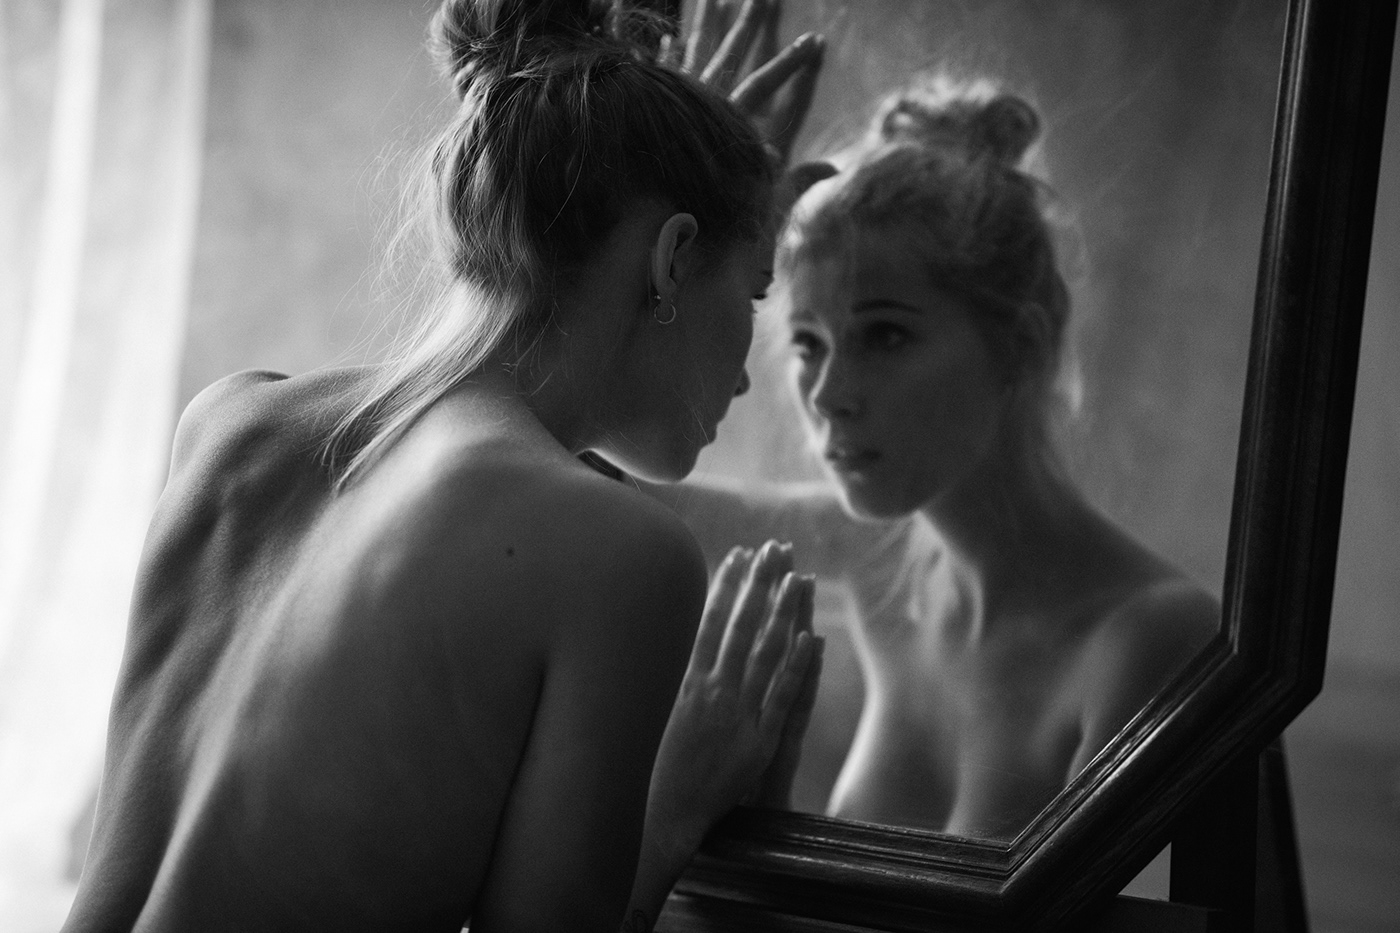 beauty girl mirror self reflection